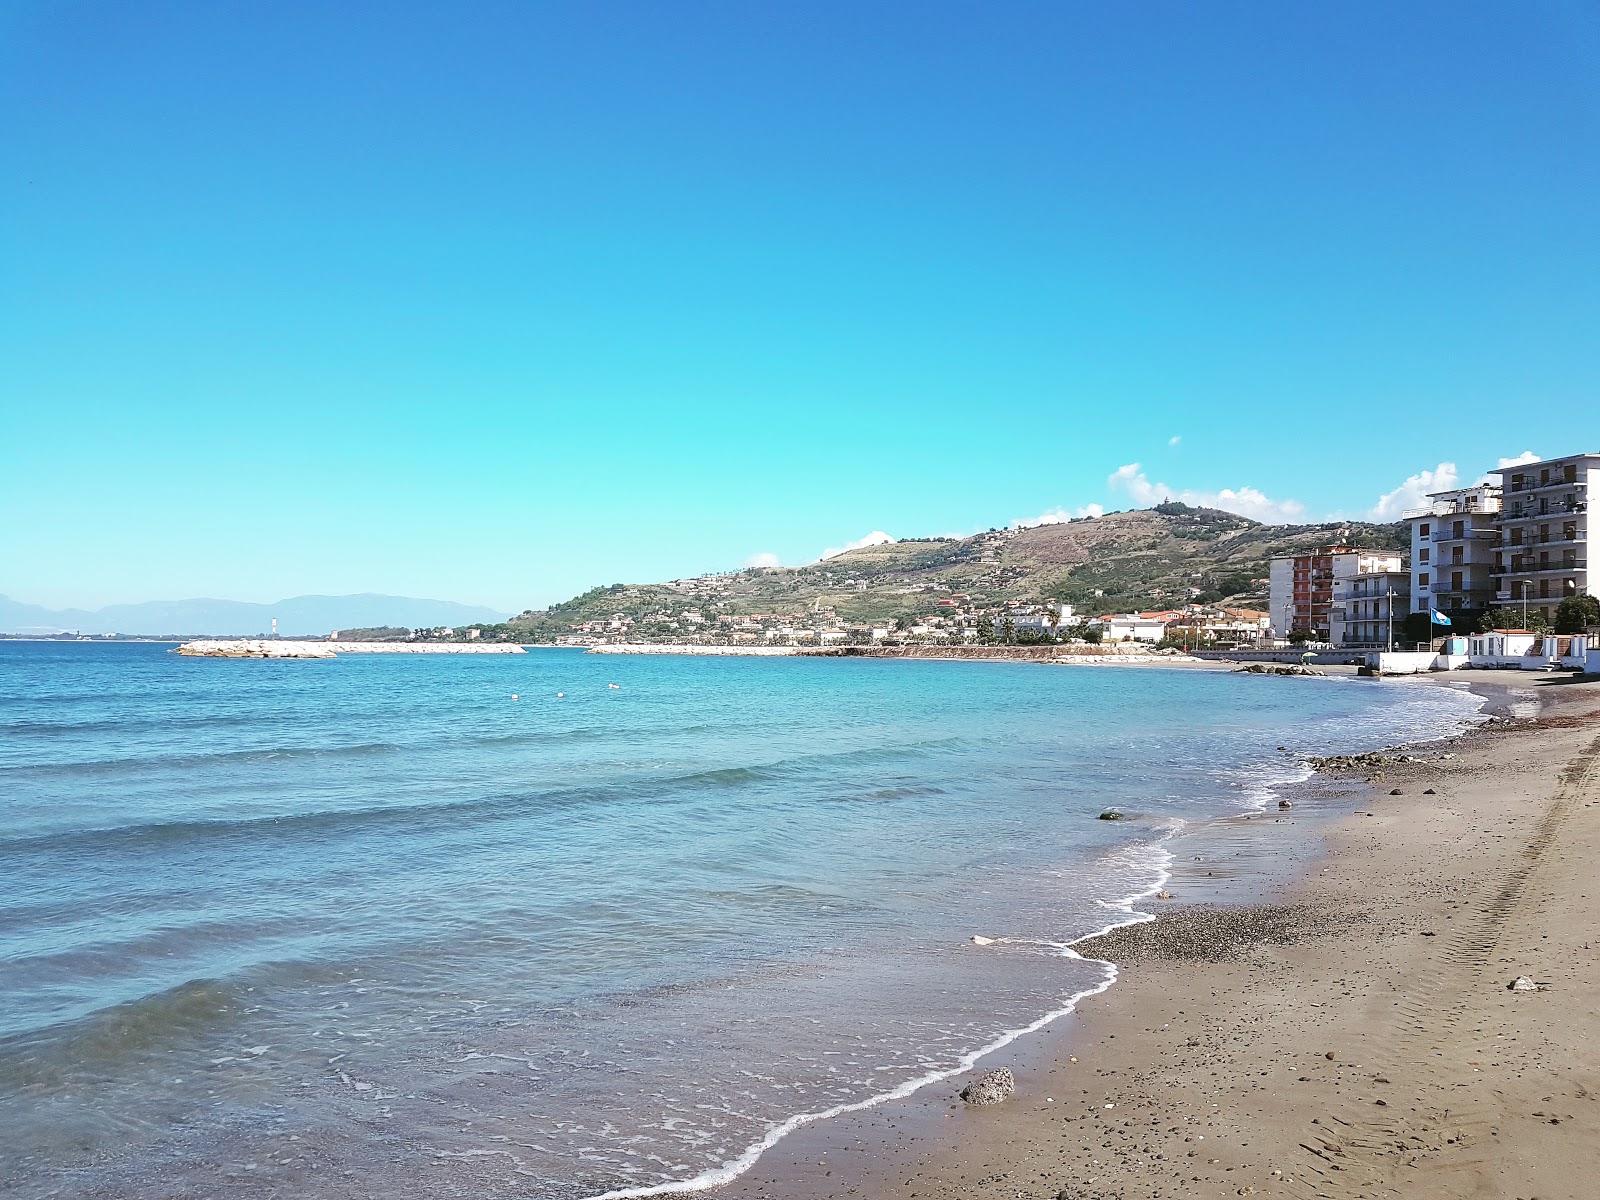 Foto av Agropoli beach med blått vatten yta